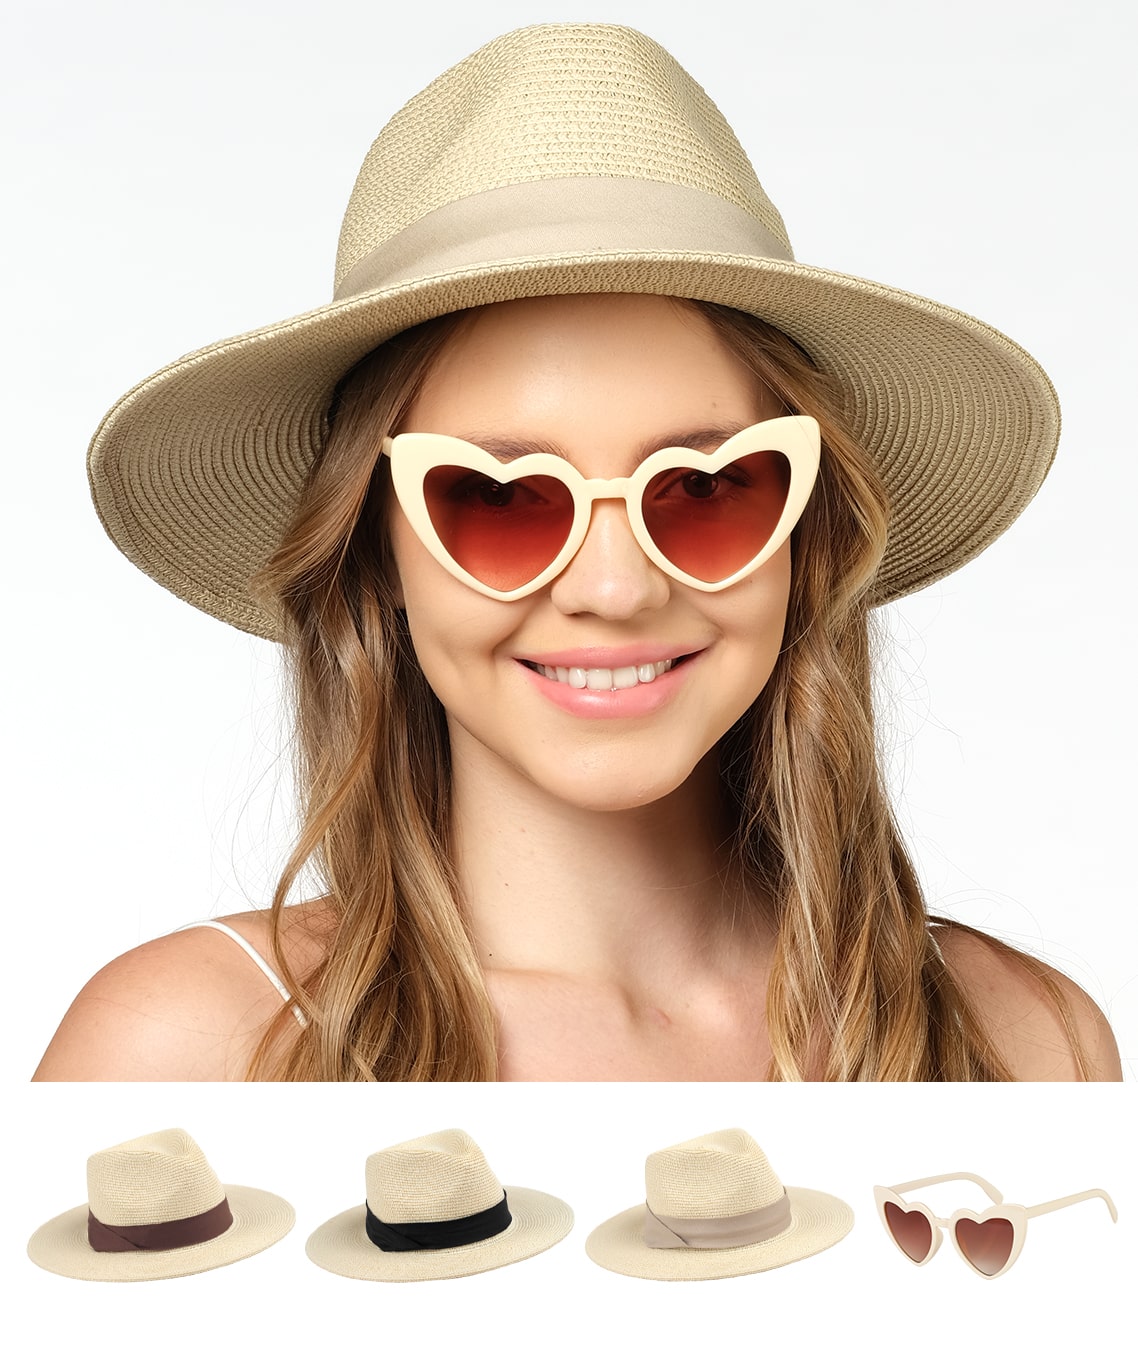 -women's sombrero de playa para mujer wicker fedora framer stylist adjustable cappello verabella  -ivory, cream, khaki, beige, sand, tan, buff, ecru,camel, black, brown, chocolate brown